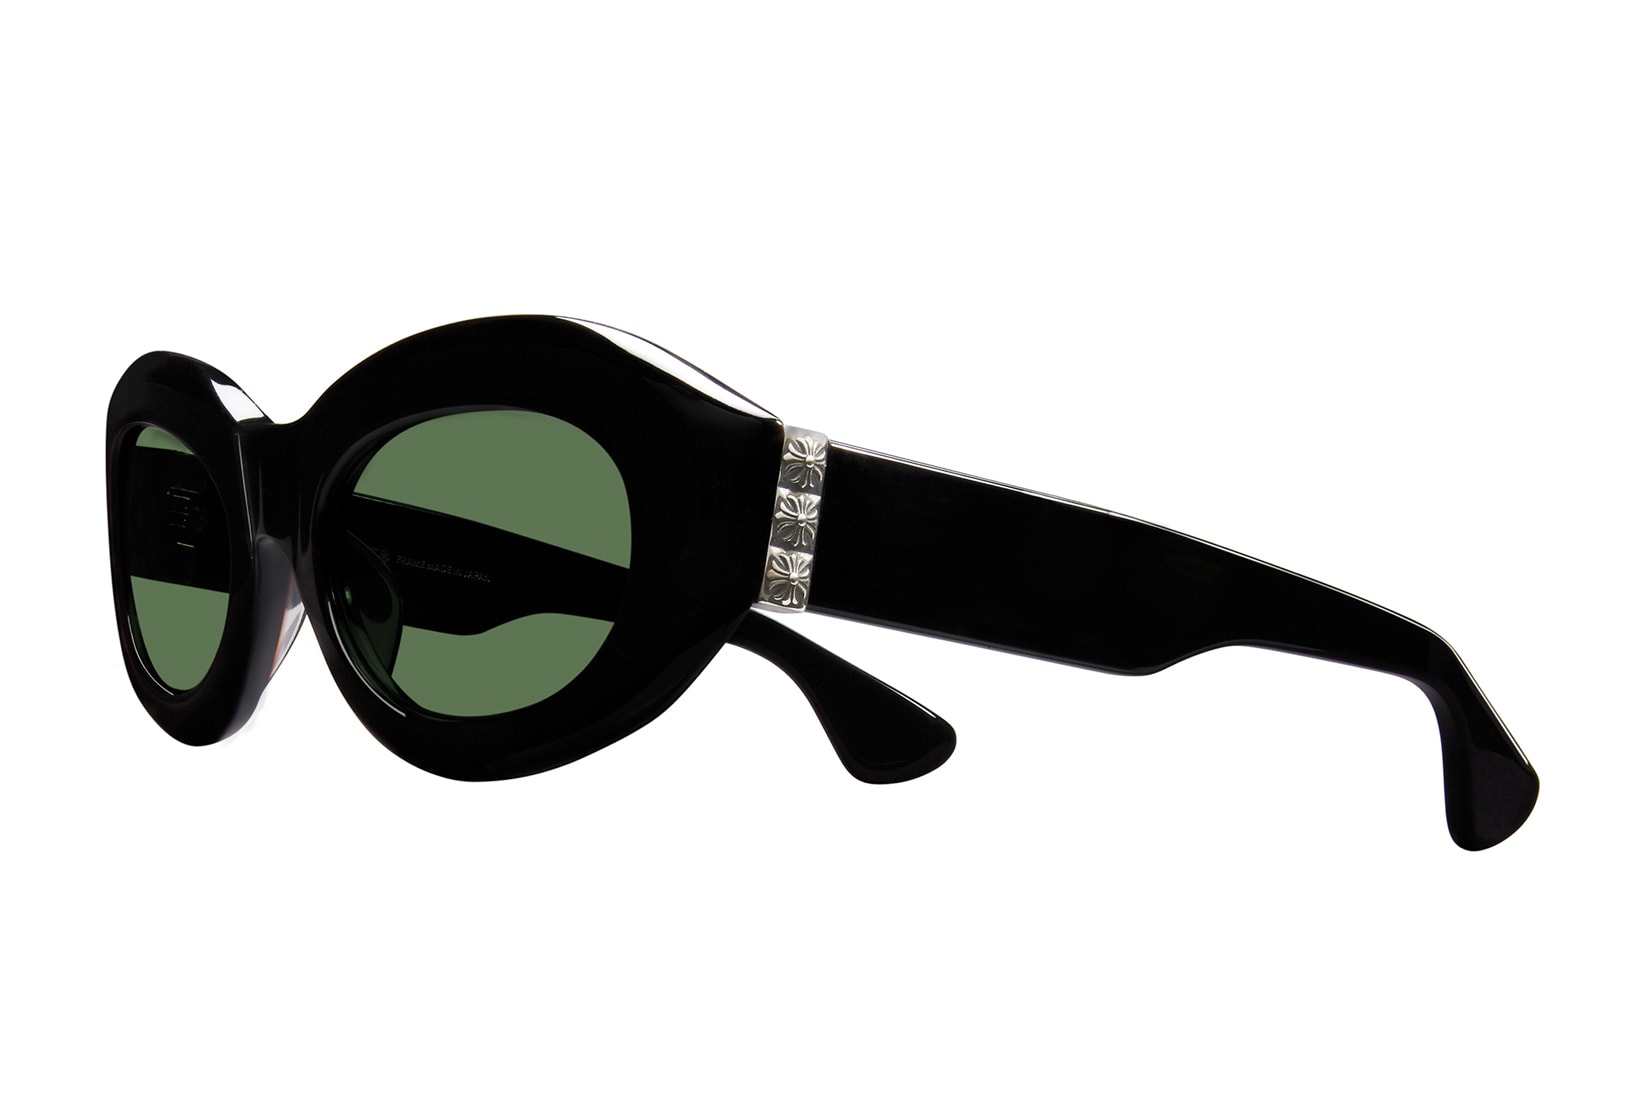 Chrome Hearts Sunglasses SLUTERELLA BLACK Laurie Lynn Stark Capsule Collection